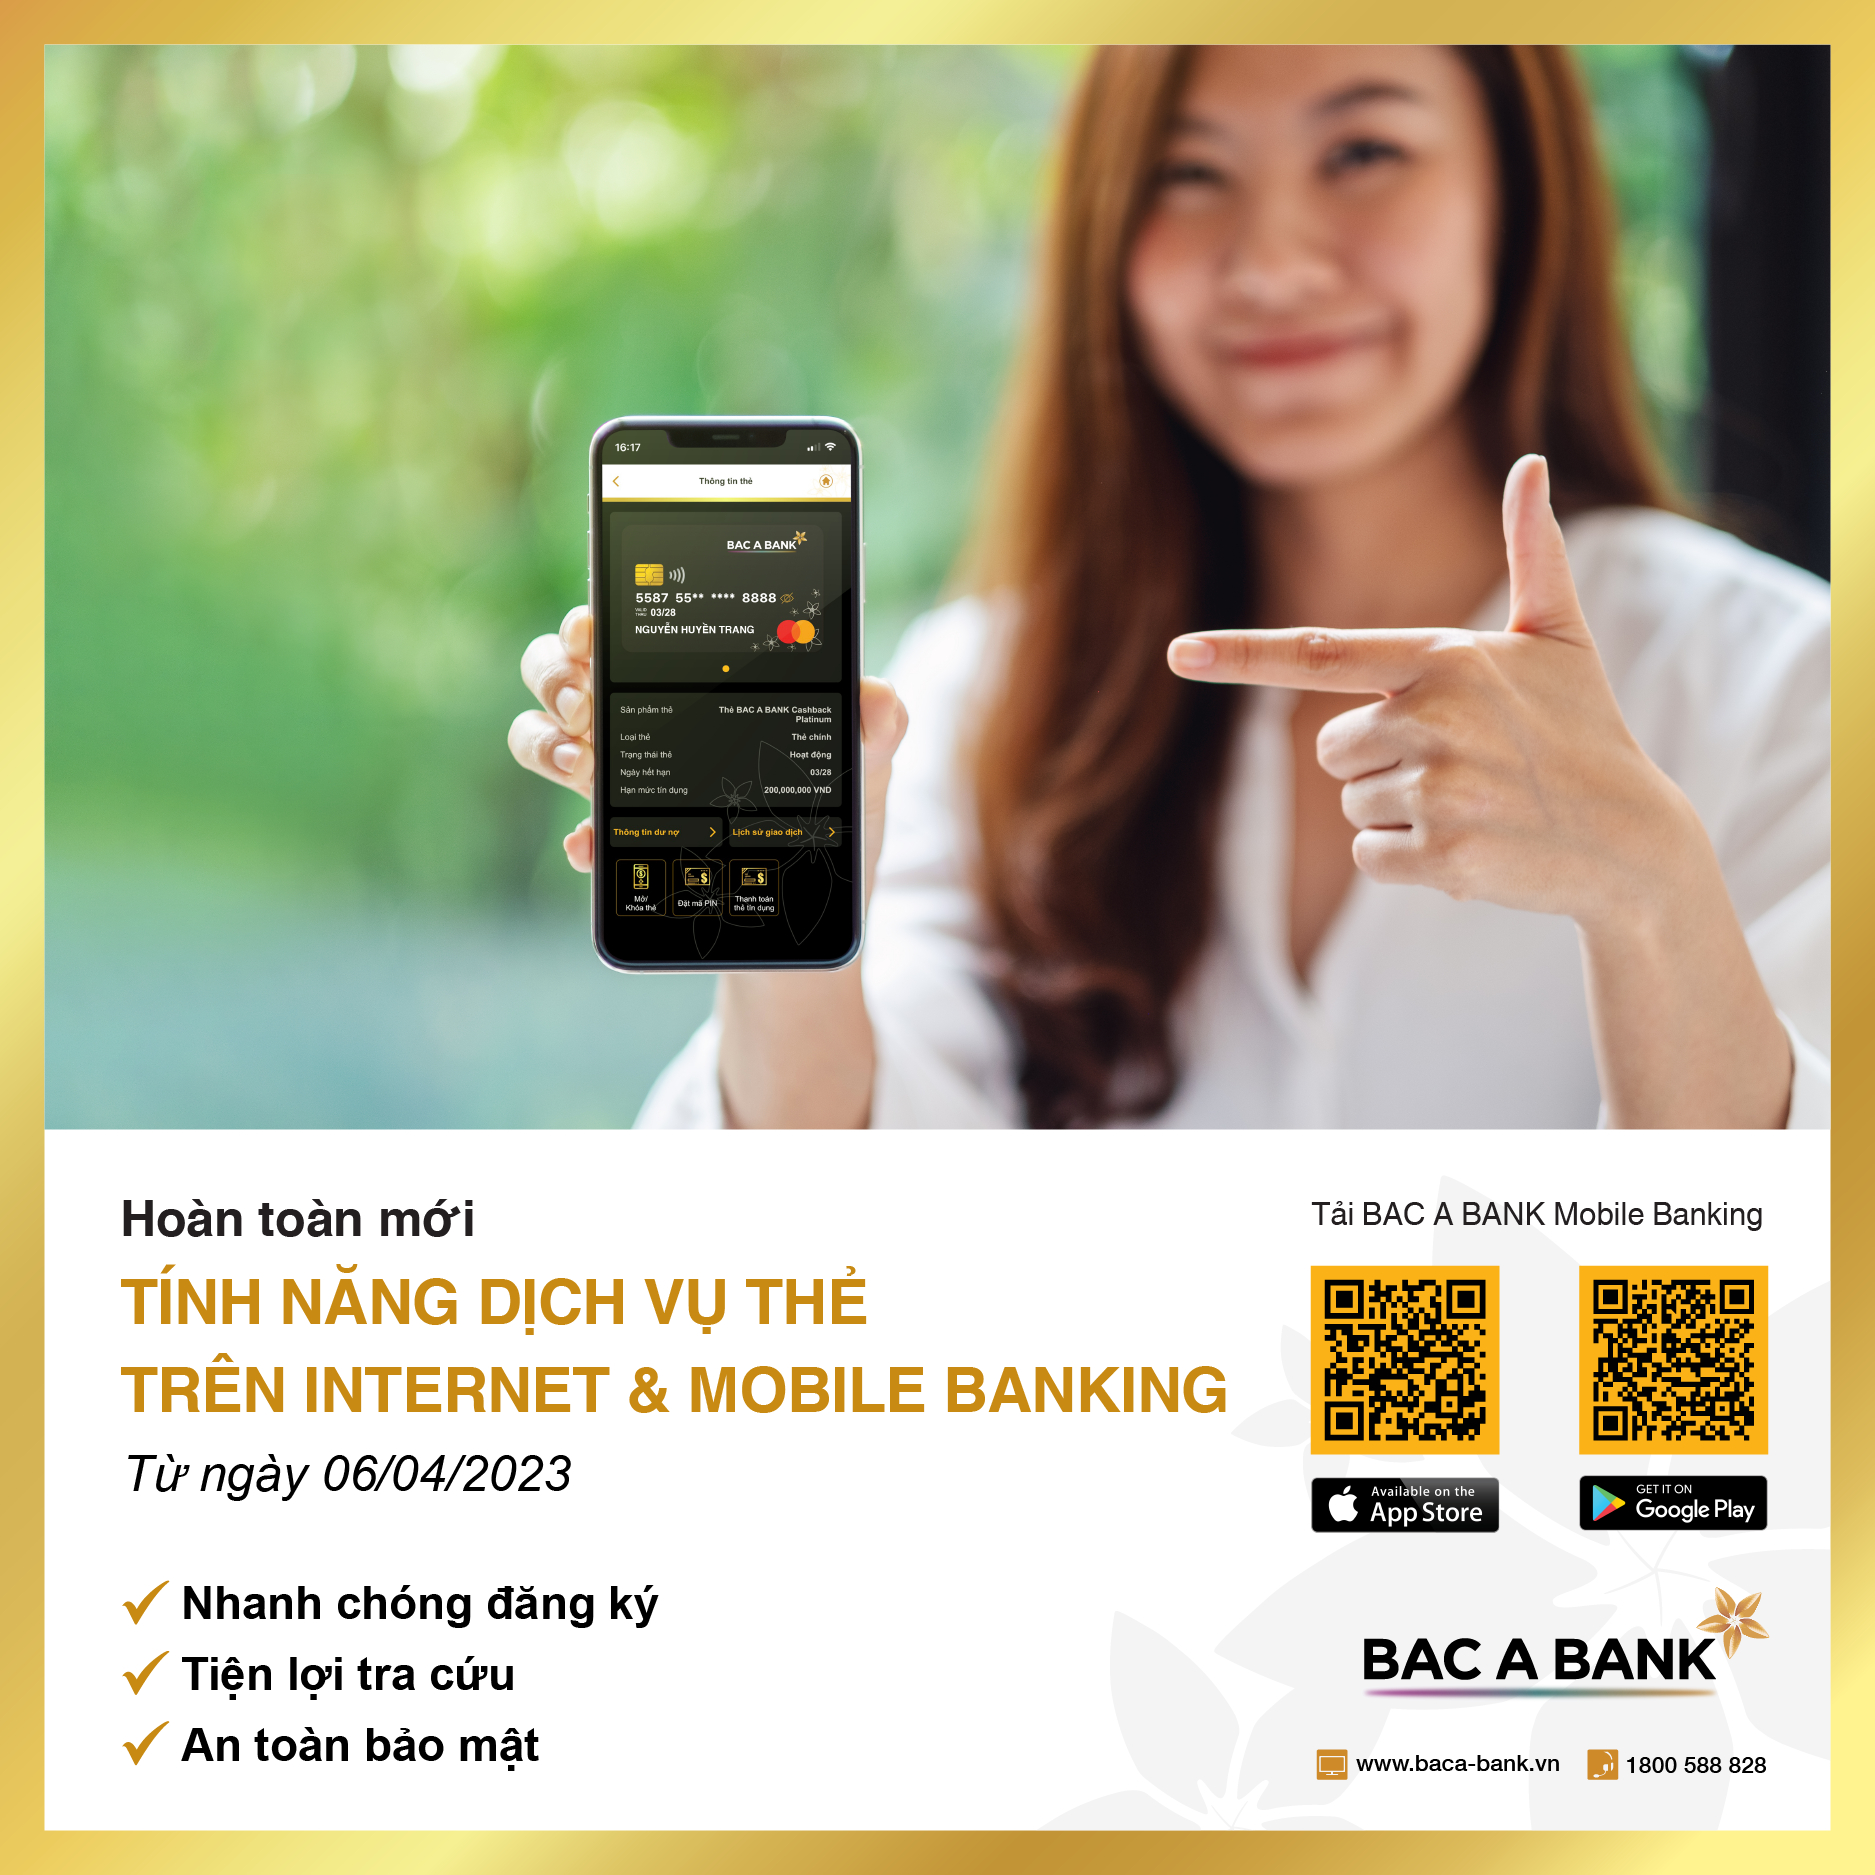 bac a bank cap nhat tinh nang dich vu the tren internet va mobile banking hinh 1